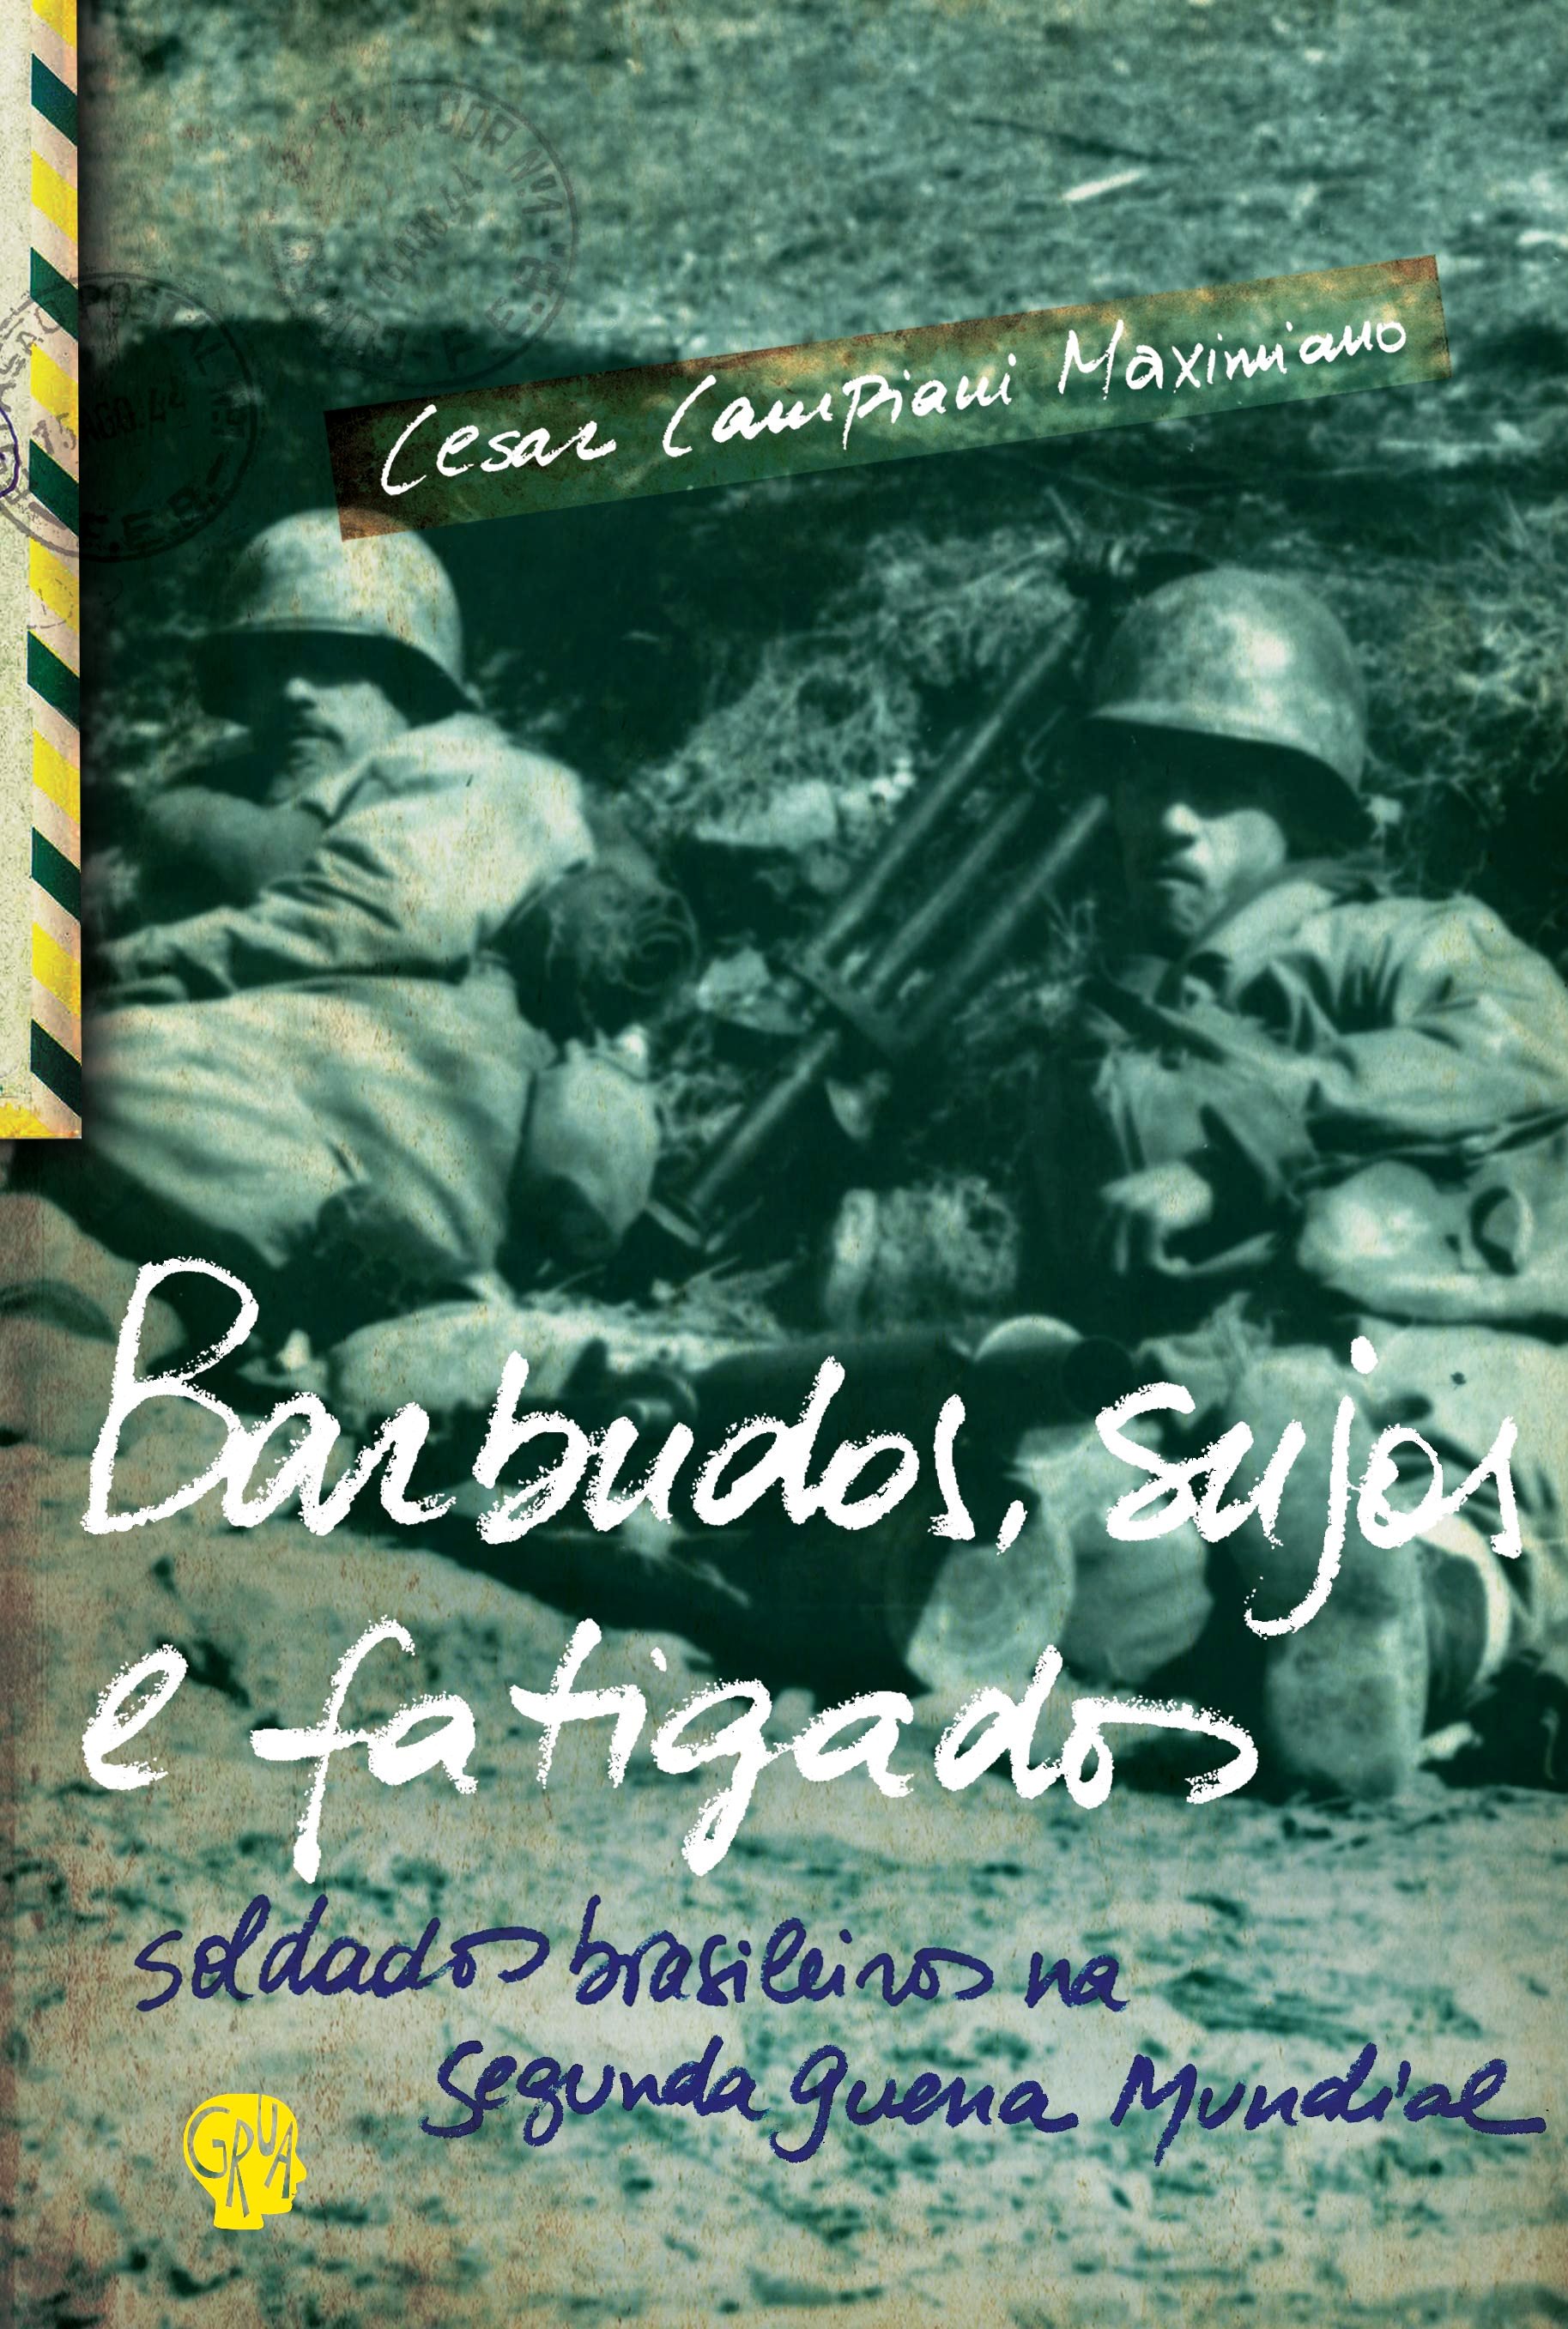 Barbudos, sujos e fatigados. Soldados brasileiros na Segunda Guerra Mundial, livro de Cesar Campiani Maximiano